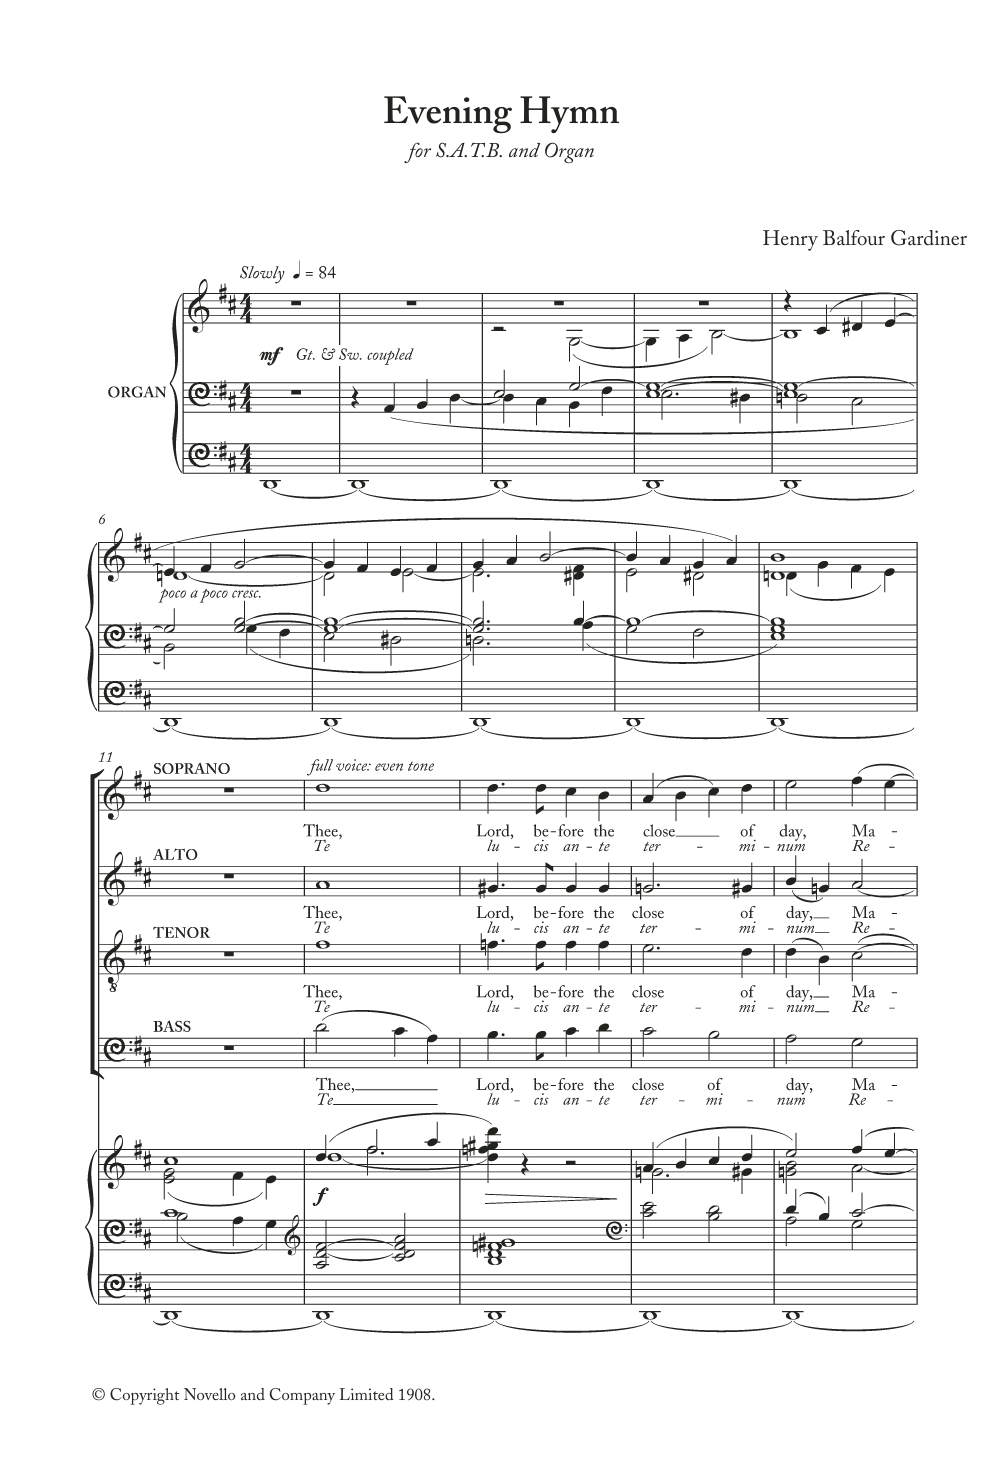 Henry Balfour Gardiner Evening Hymn sheet music notes and chords arranged for SATB Choir